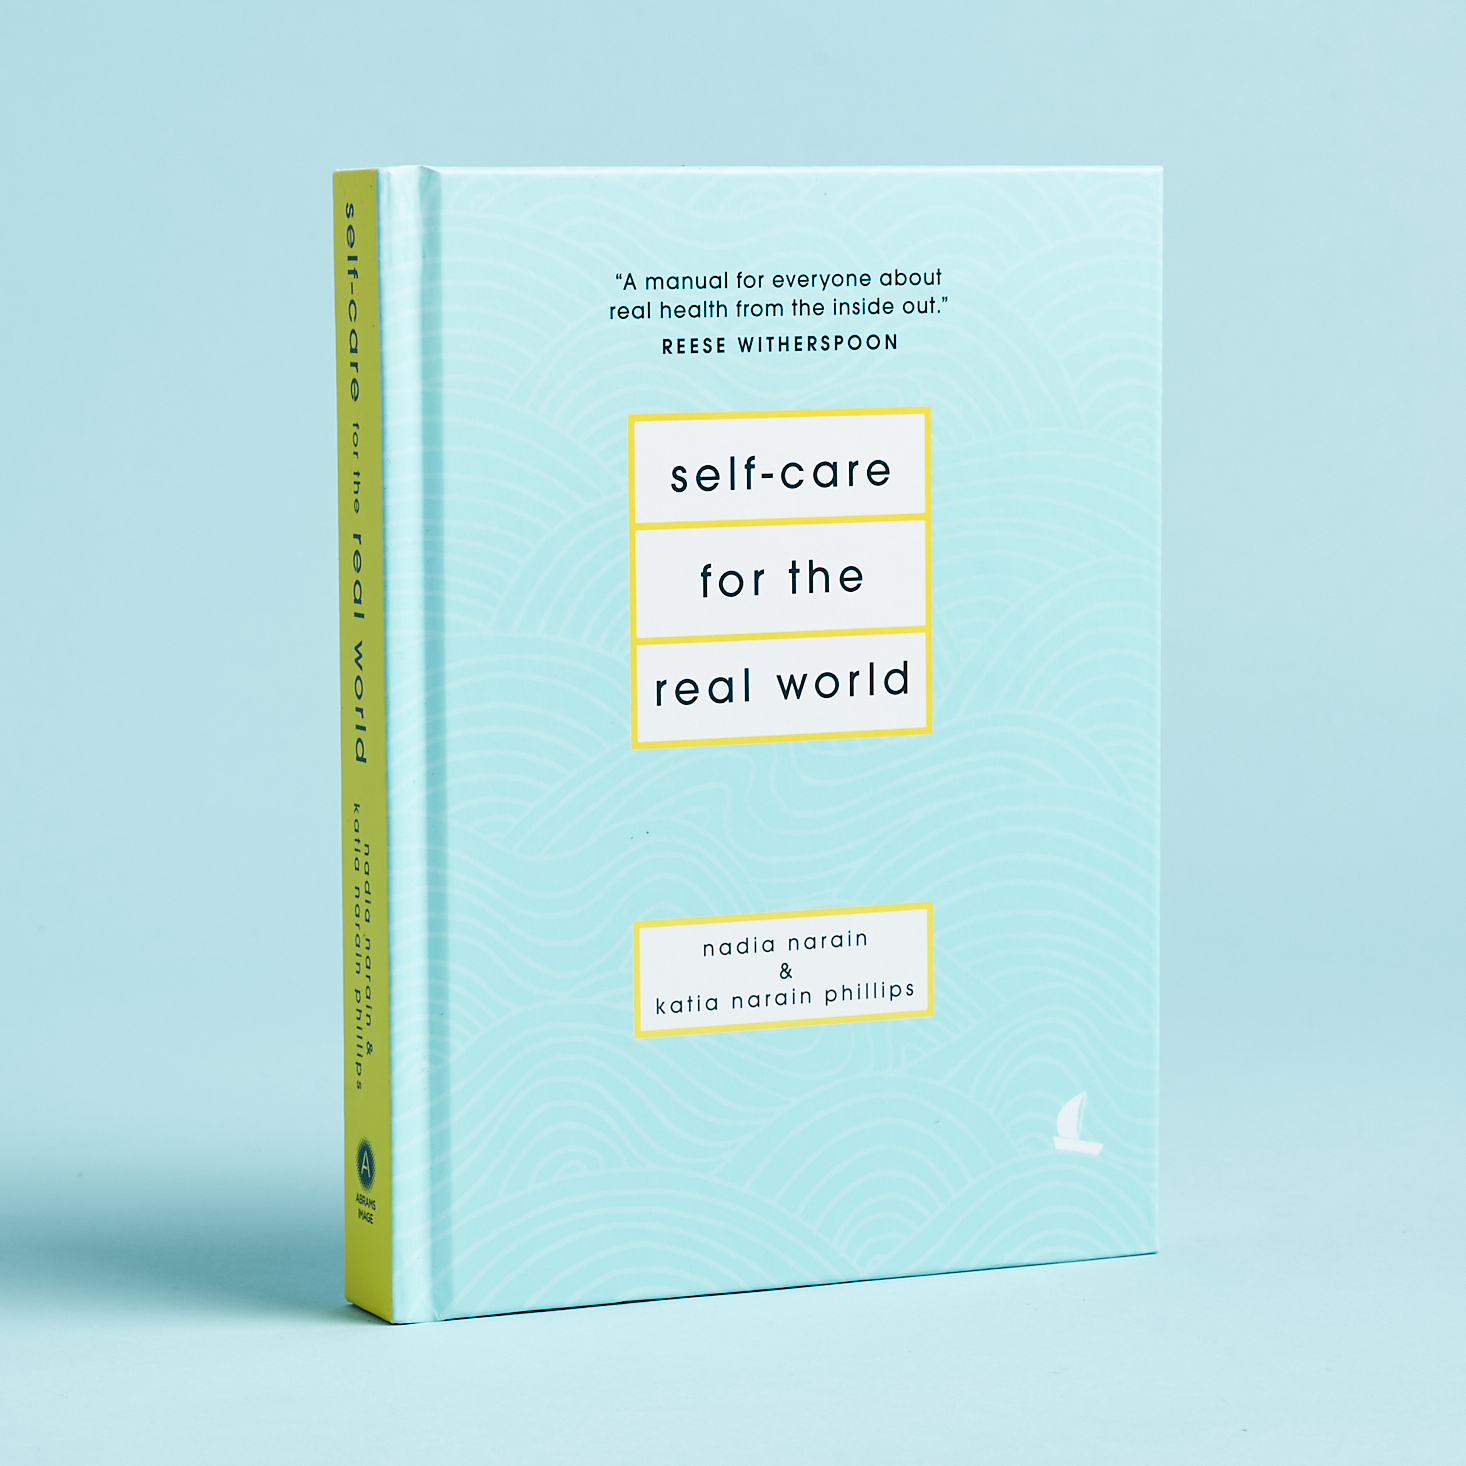 SELF-CARE FOR THE REAL WORLD by Nadia Narain & Katia Narain Phillips